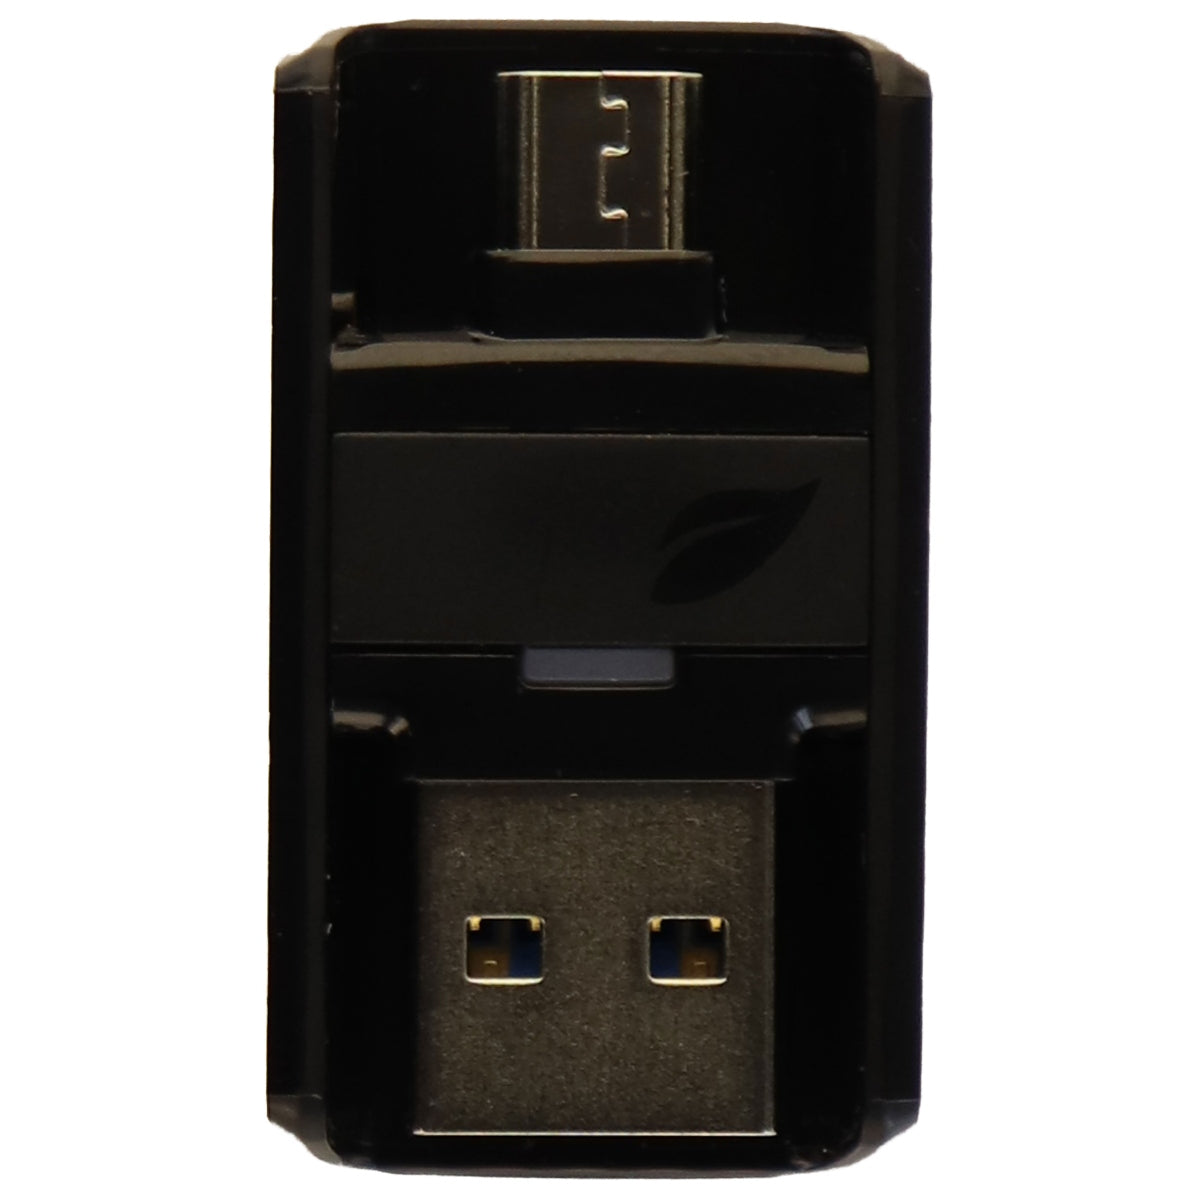 LEEF Bridge 3.0 USB Storage Flash Drive with Micro-USB Plug - Black (16GB) Digital Storage - USB Flash Drives Leef    - Simple Cell Bulk Wholesale Pricing - USA Seller